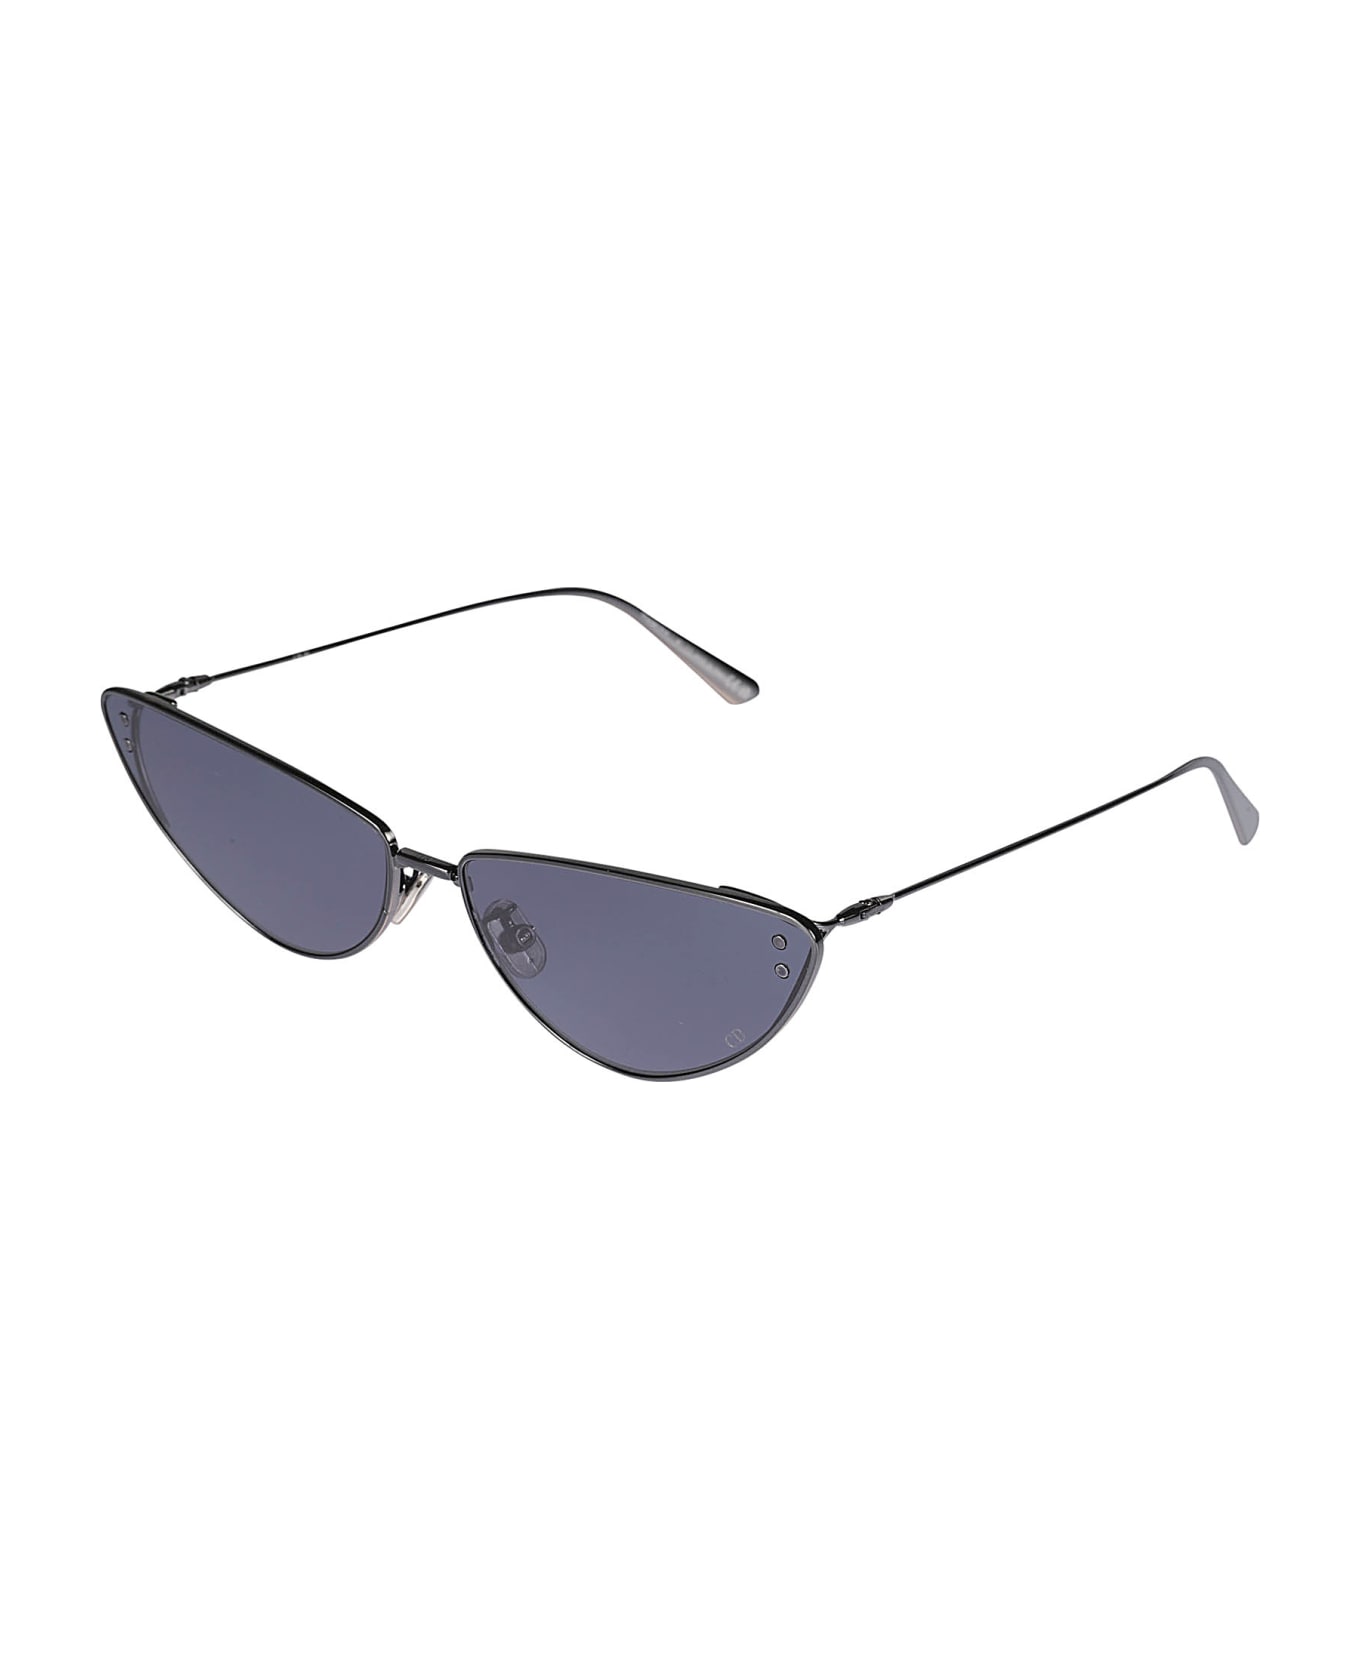 Dior Eyewear Missdior Sunglasses - Nero